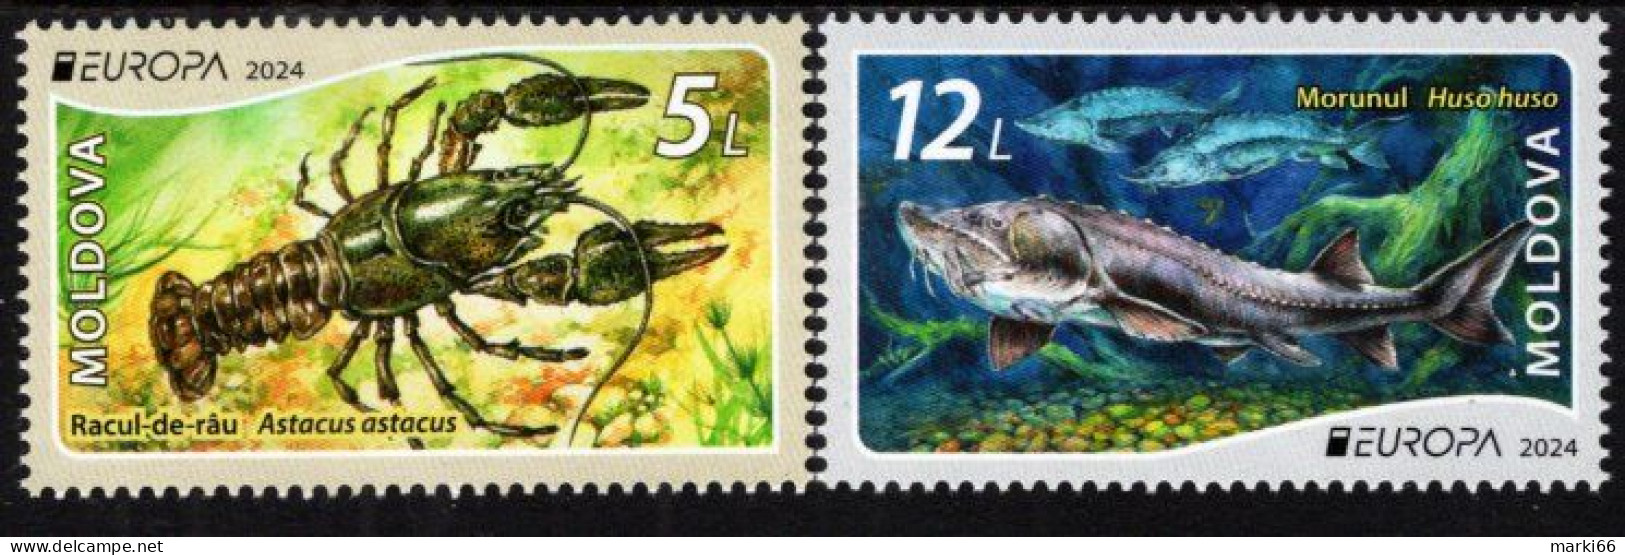 Moldova - 2024 - Europa CEPT - Underwater Flora And Fauna - Mint Stamp Set - Moldawien (Moldau)